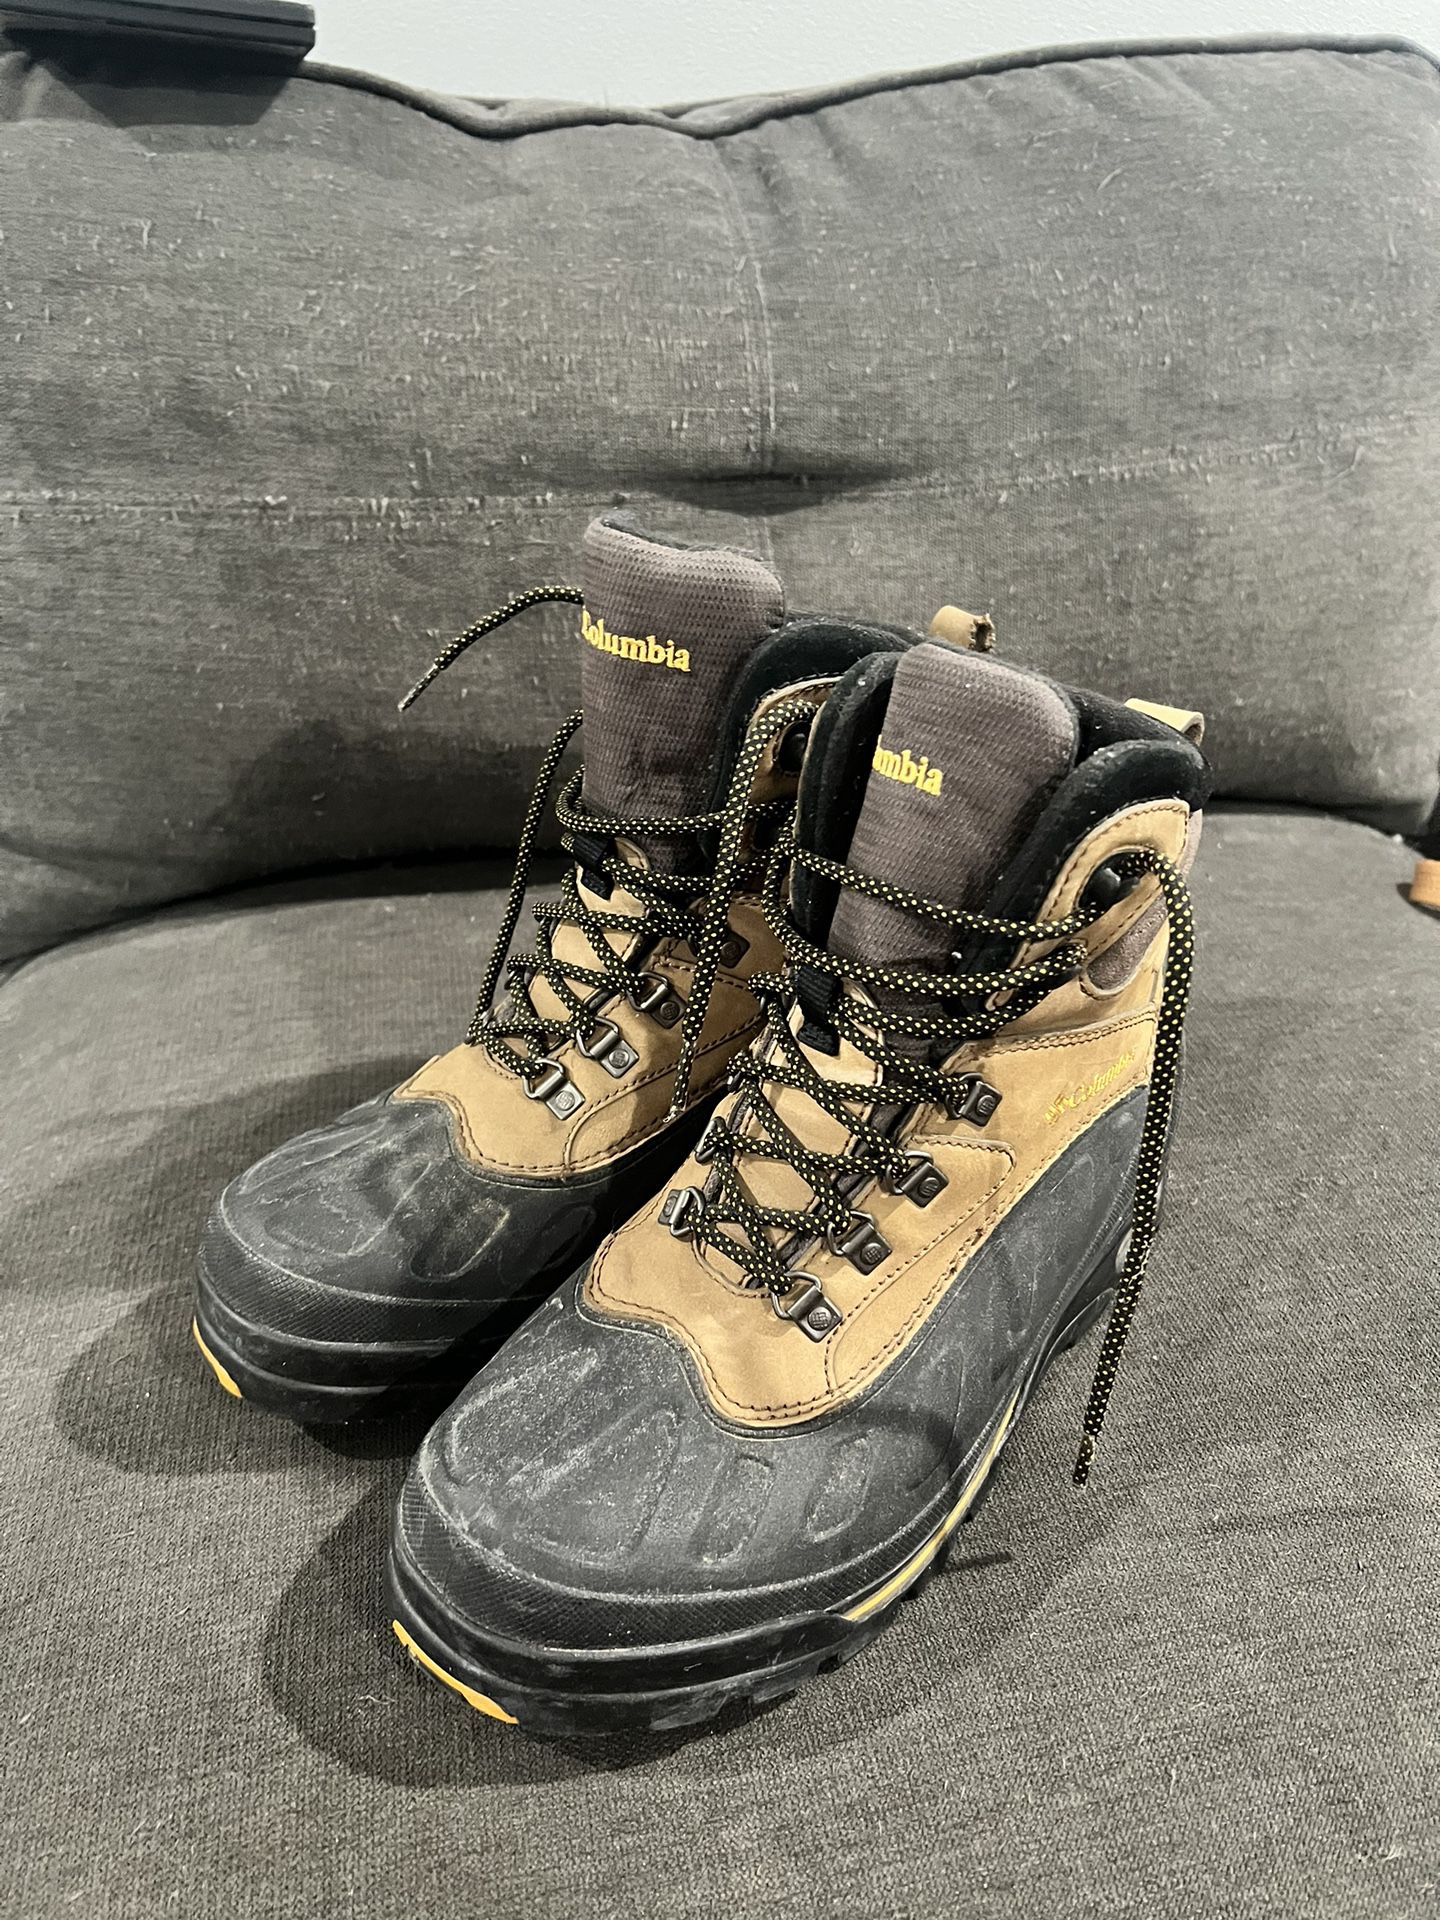 Men’s Columbia Snow Boots Size 10 